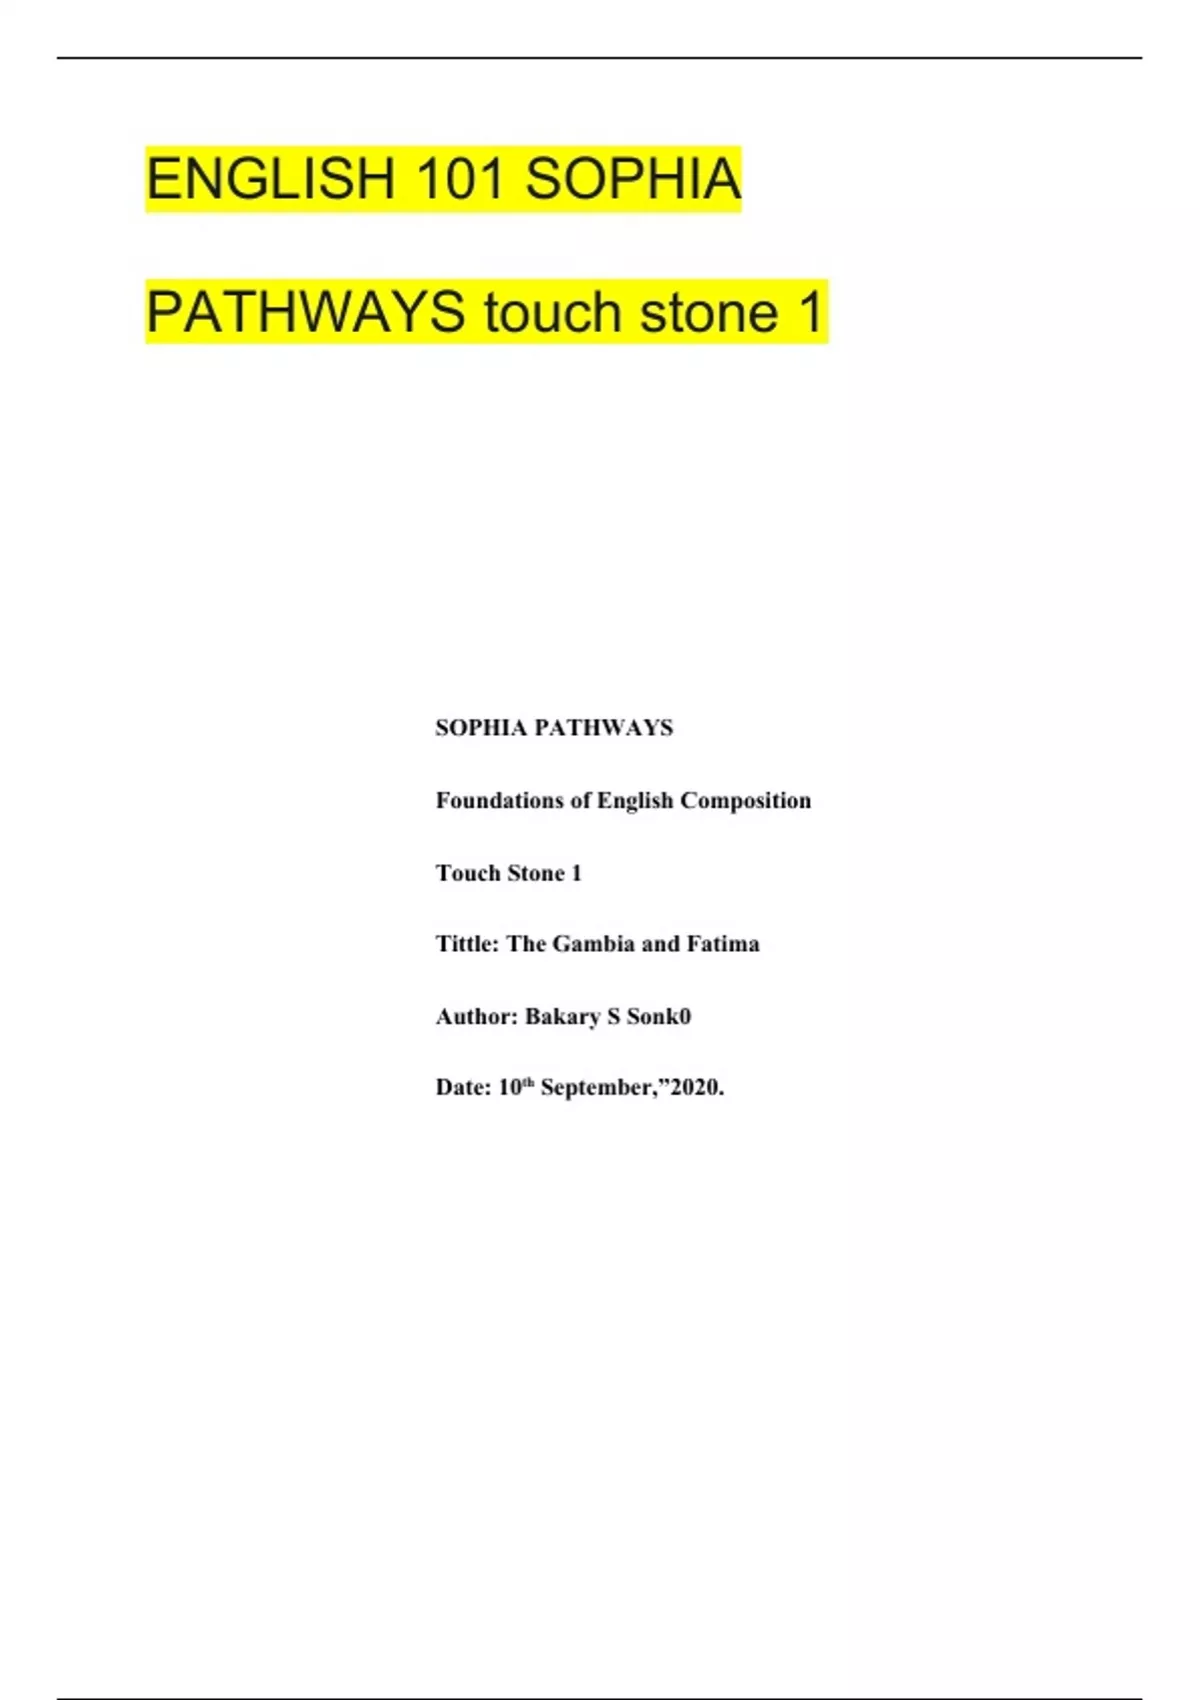 SOPHIA PATHWAYS Foundations of English Composition - SOPHIA